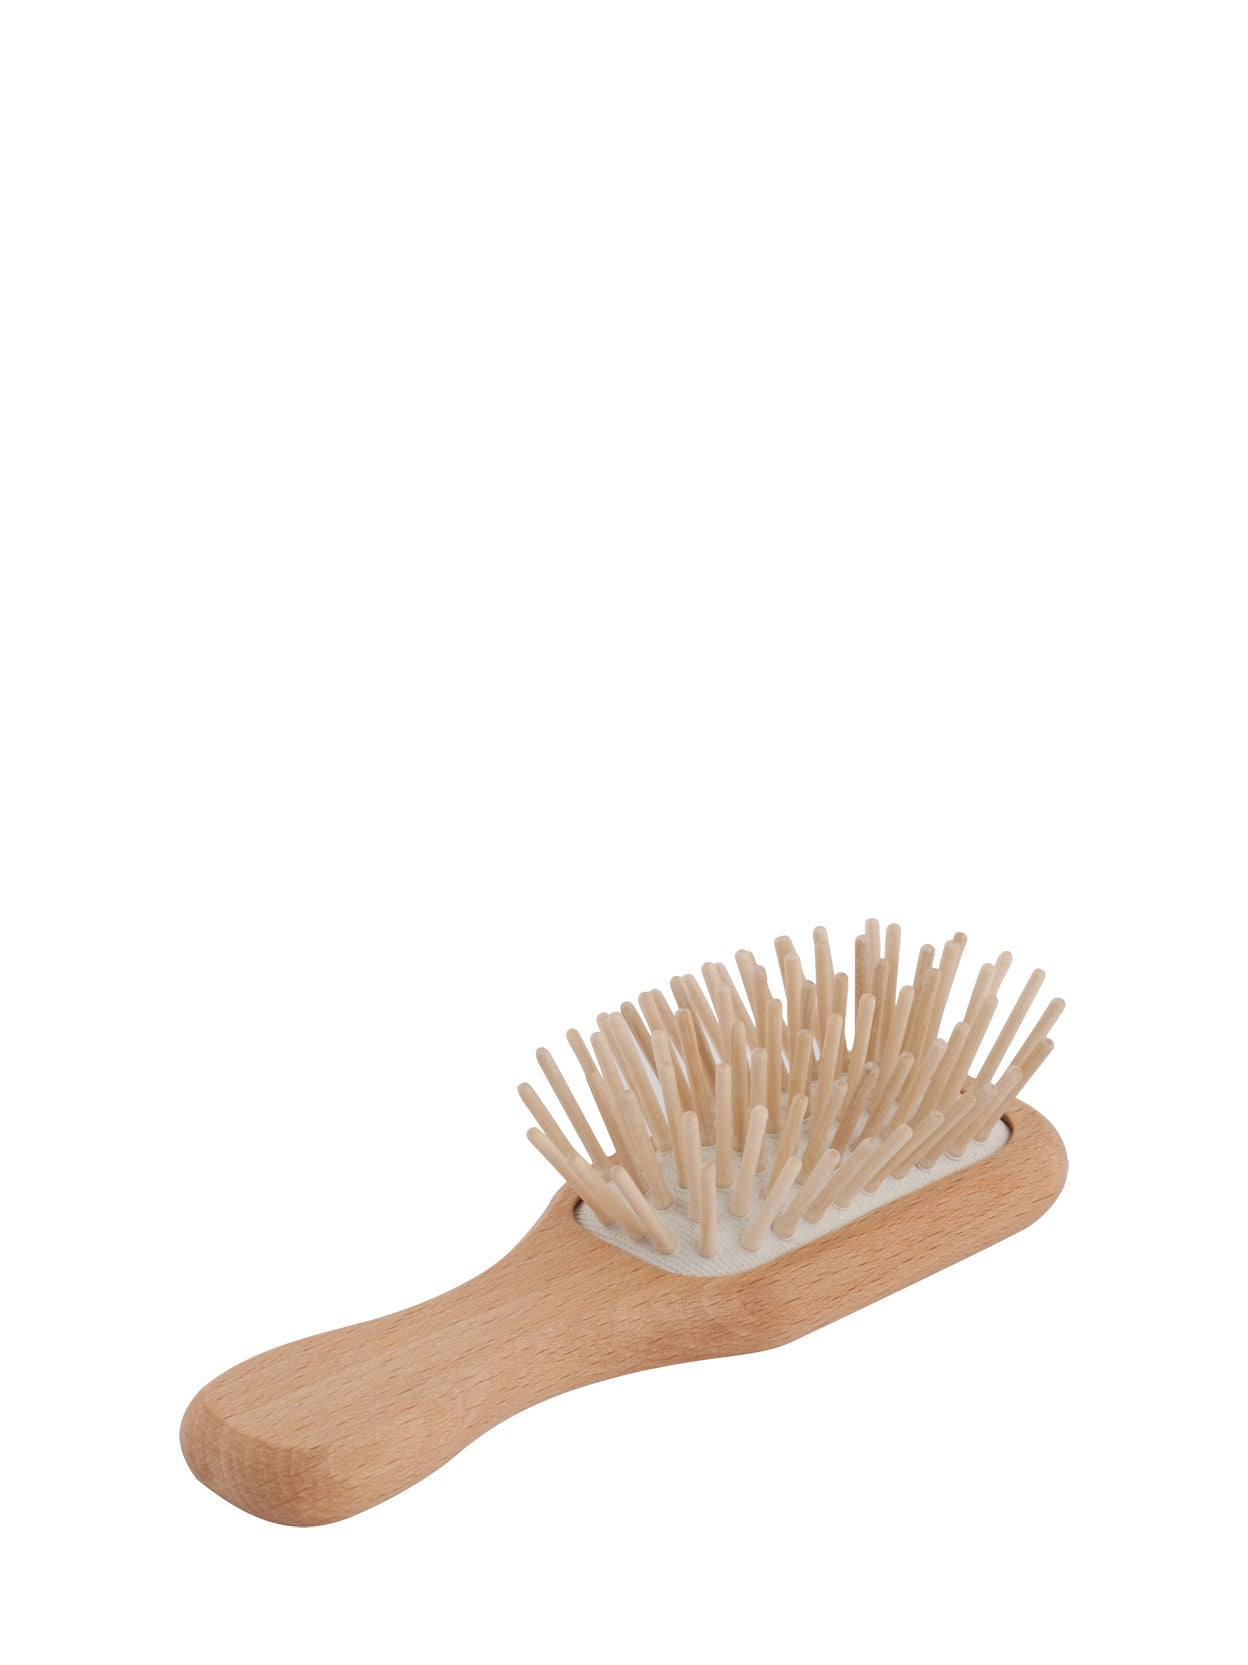 Pocket hairbrush, wooden pins